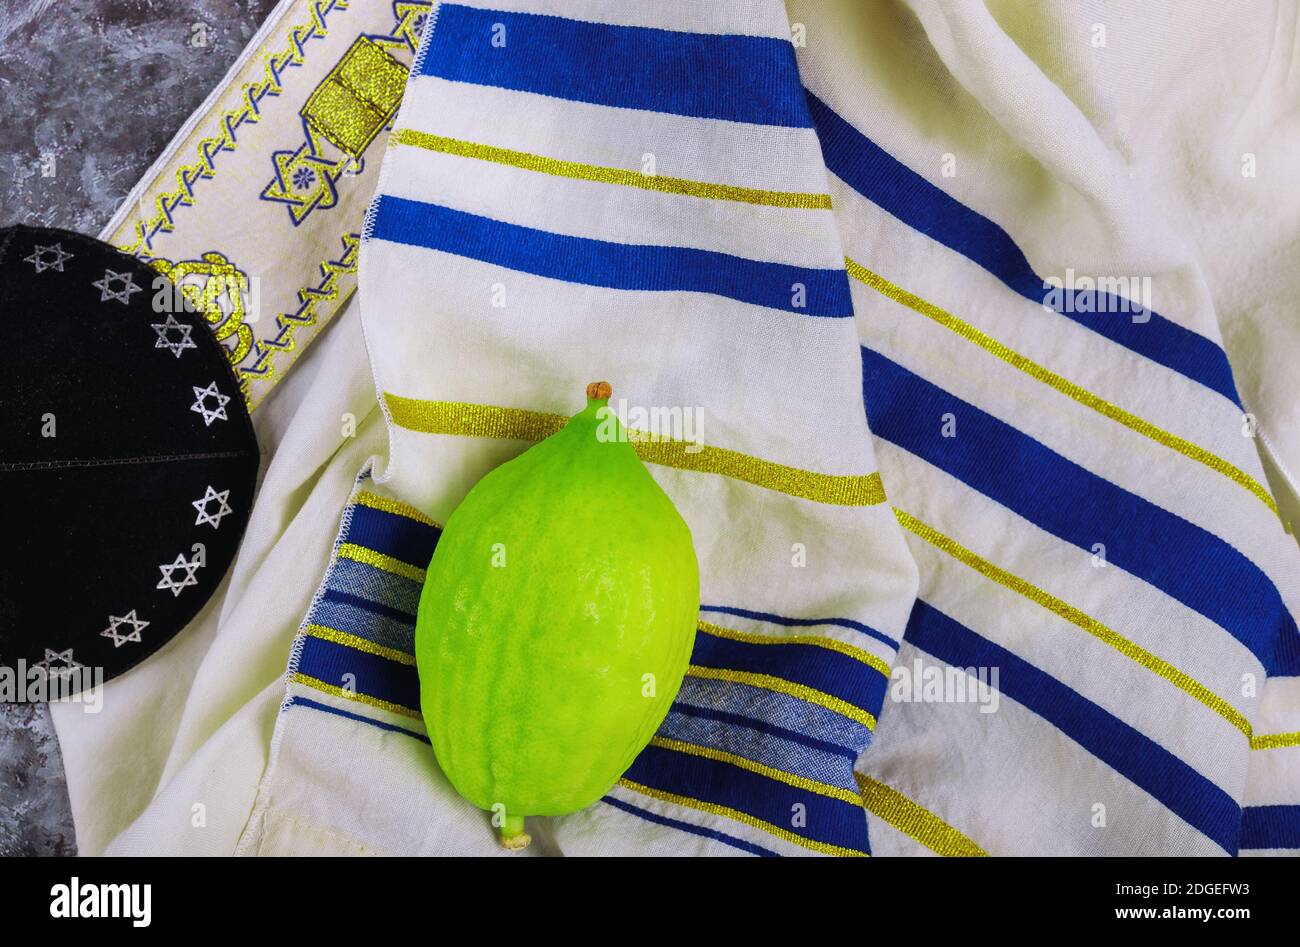 Traditionelle Symbole Jüdisches Festival von Sukkot Etrog, lulav, hadas, Arava beten Buch kippah Tallit Stockfoto